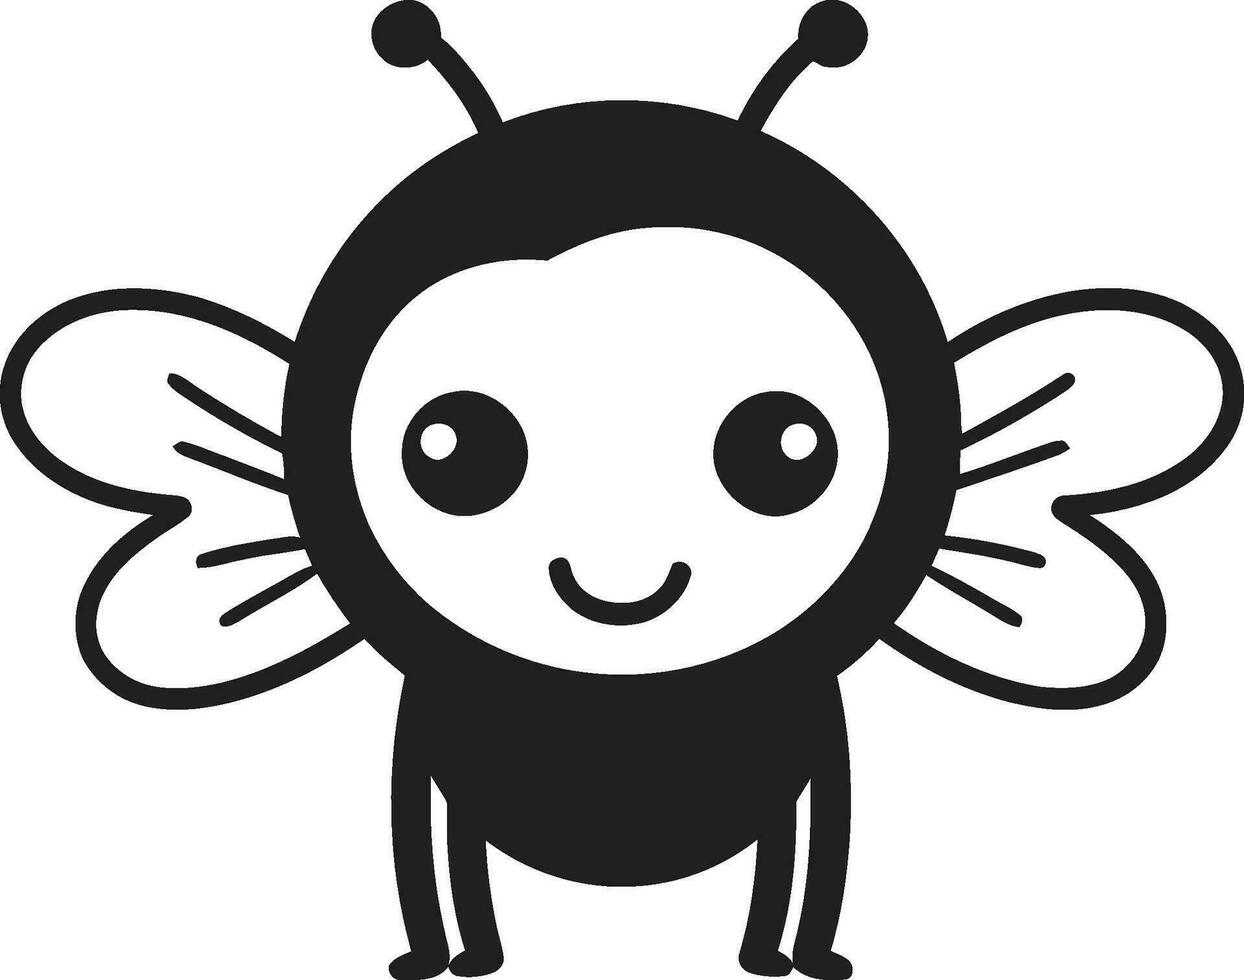 Bold Flea Logo Design Modern and Impactful Eye Catching Flea Logo Icon for Your Website or App vector